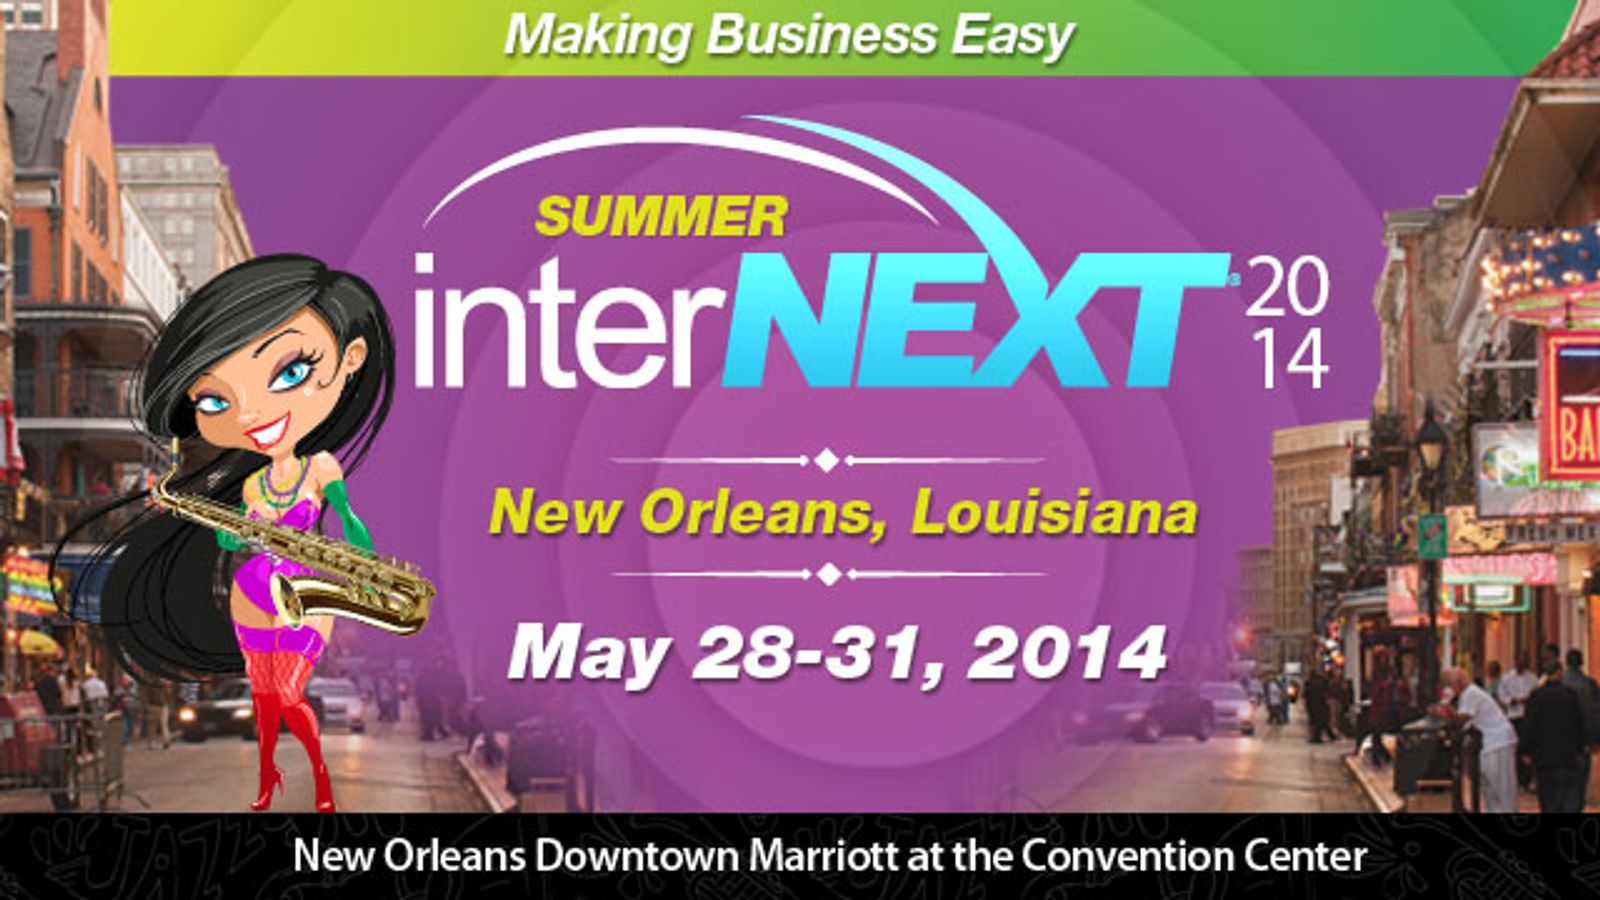 Internext Expo New Orleans 2014 Announces Seminar Topics